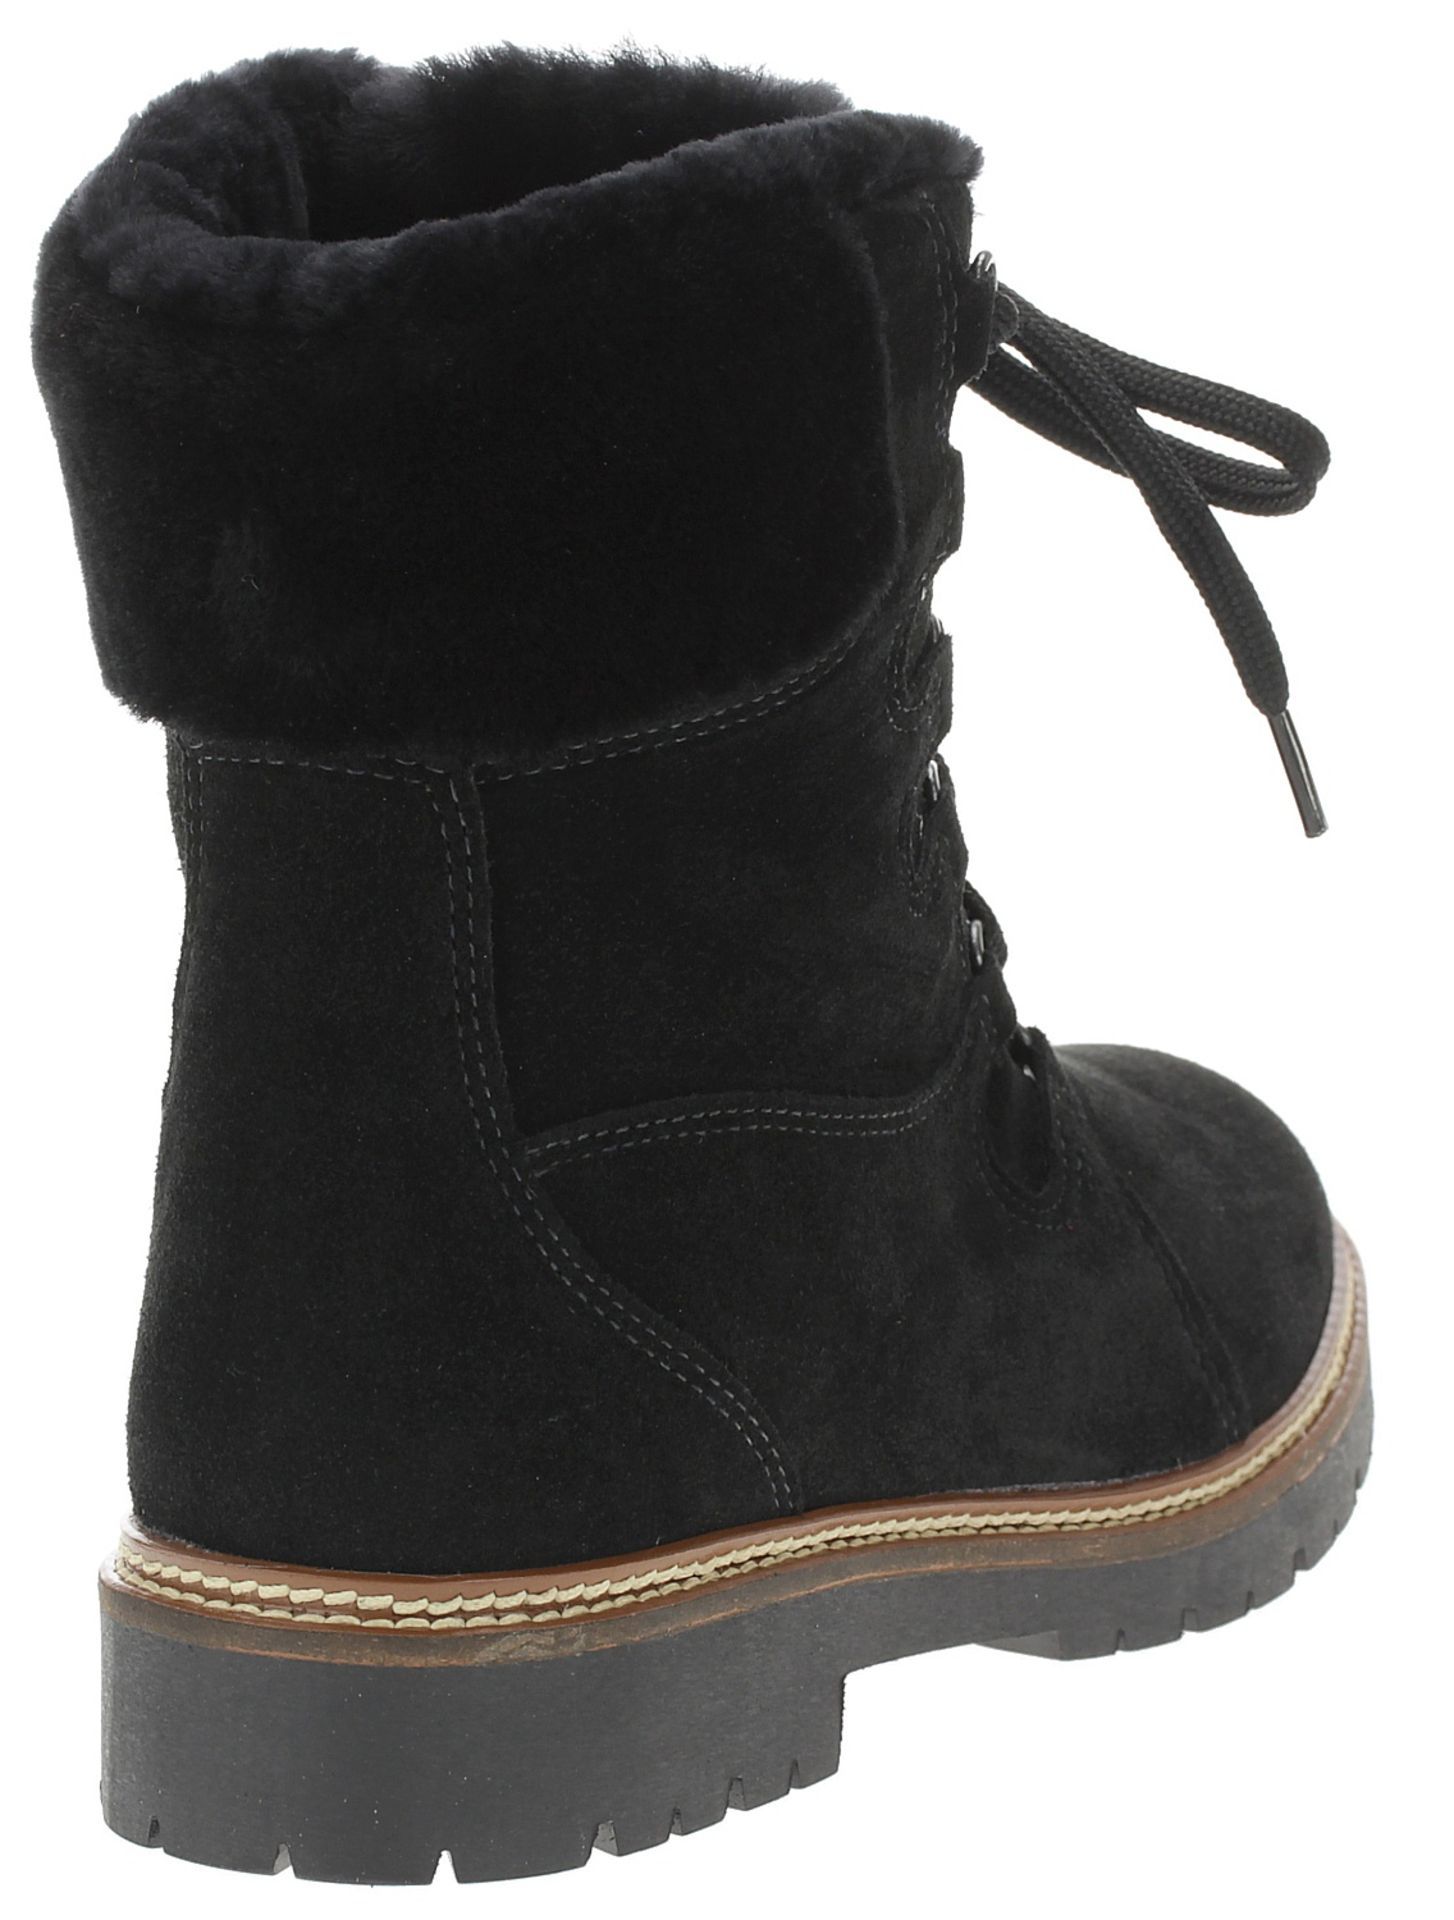 1 x Pair of Designer Olang Meribel 81 Nero Women's Winter Boots - Euro Size 41 - Brand New Boxed - Image 5 of 5